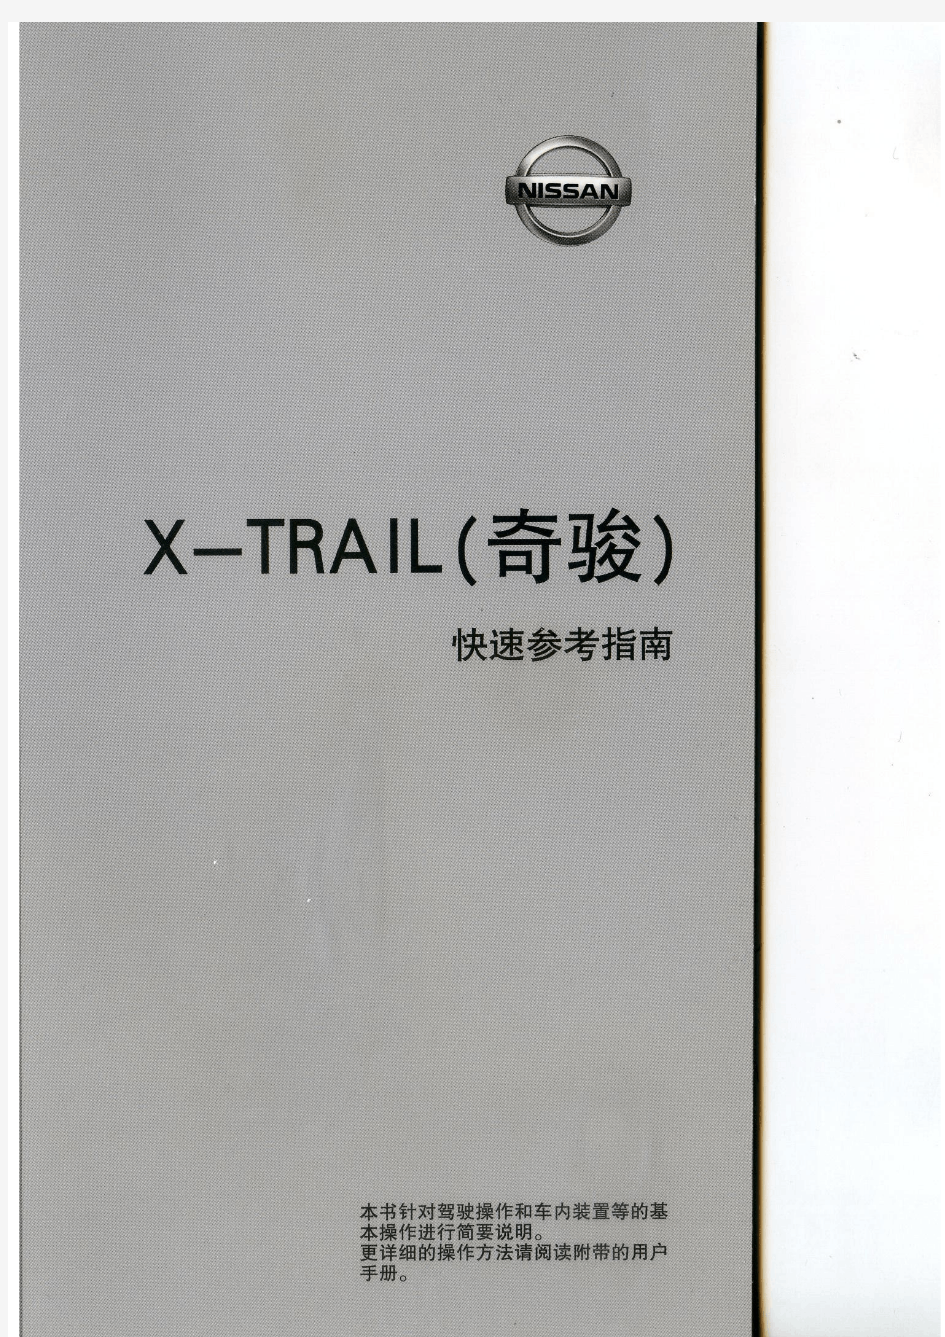 X-TRAIL(奇骏)快速参考指南